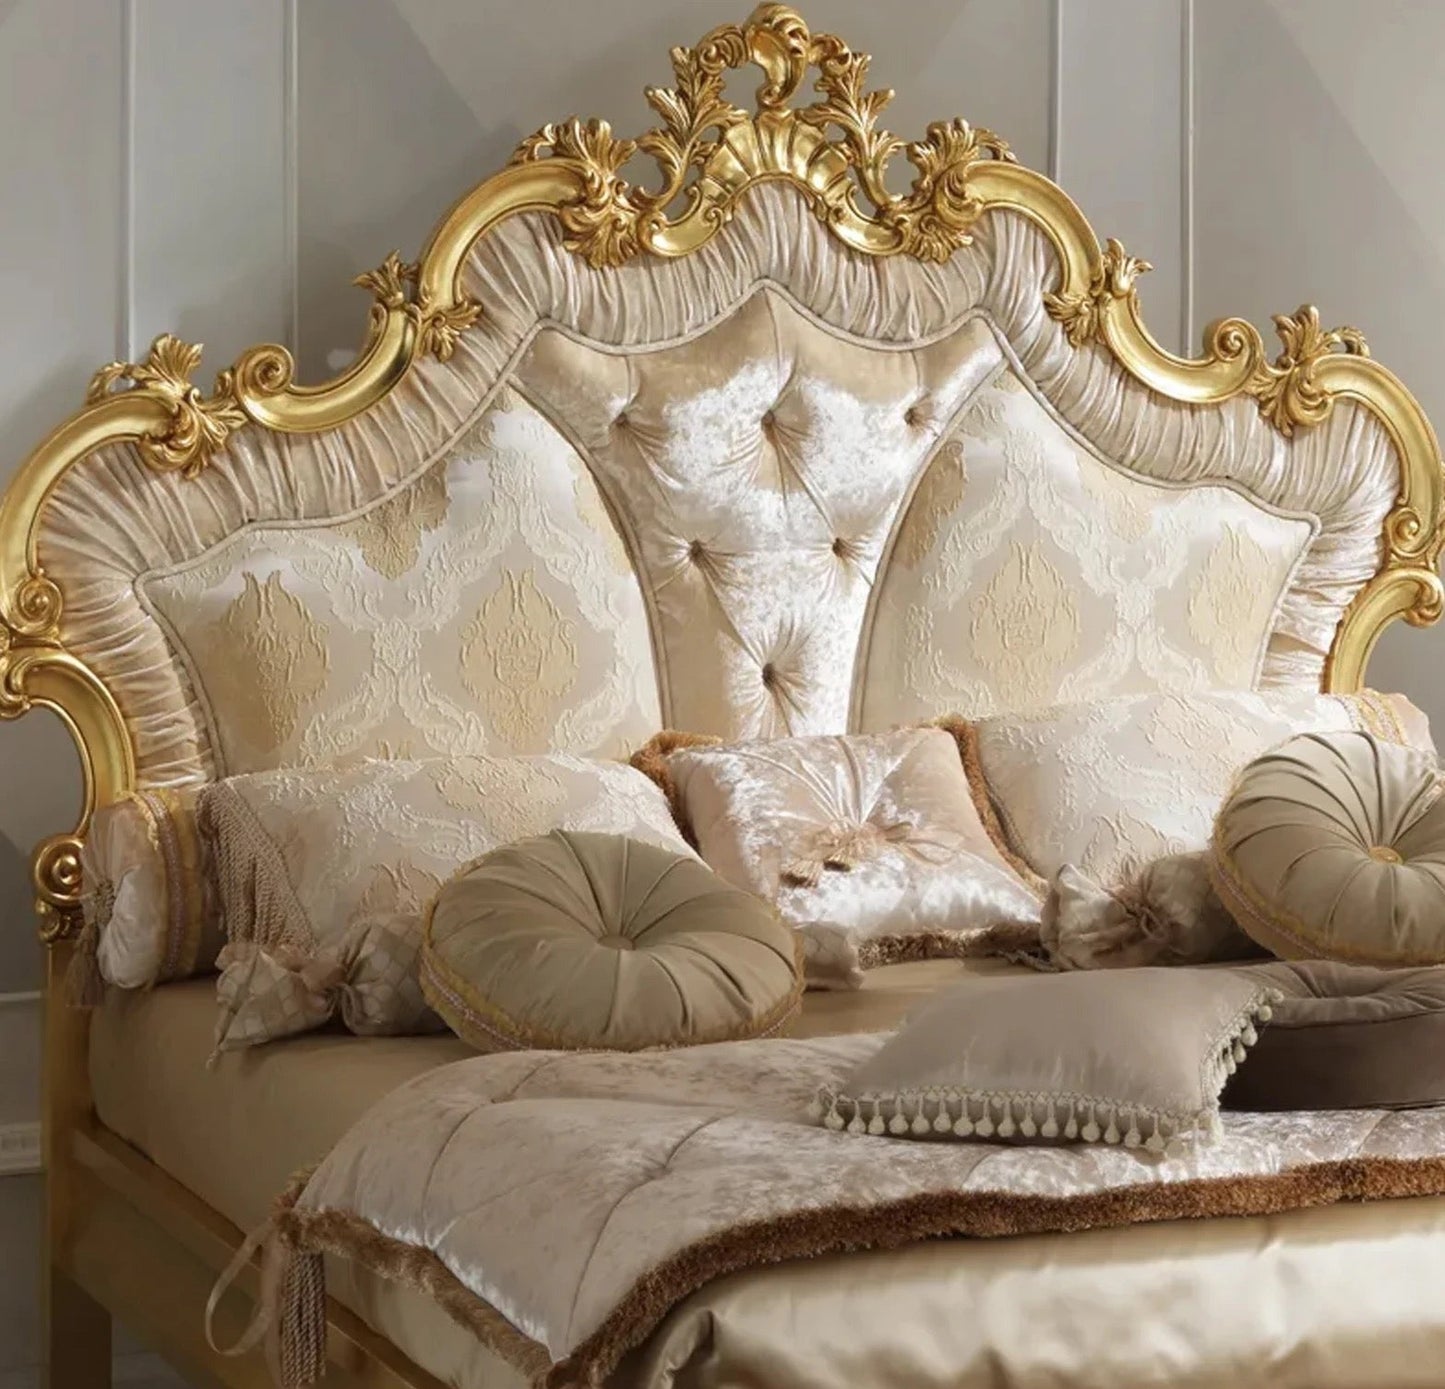 Baroque Desing Bedroom Bed Luxury Upholstery Antique Design Bedroom Furniture Set